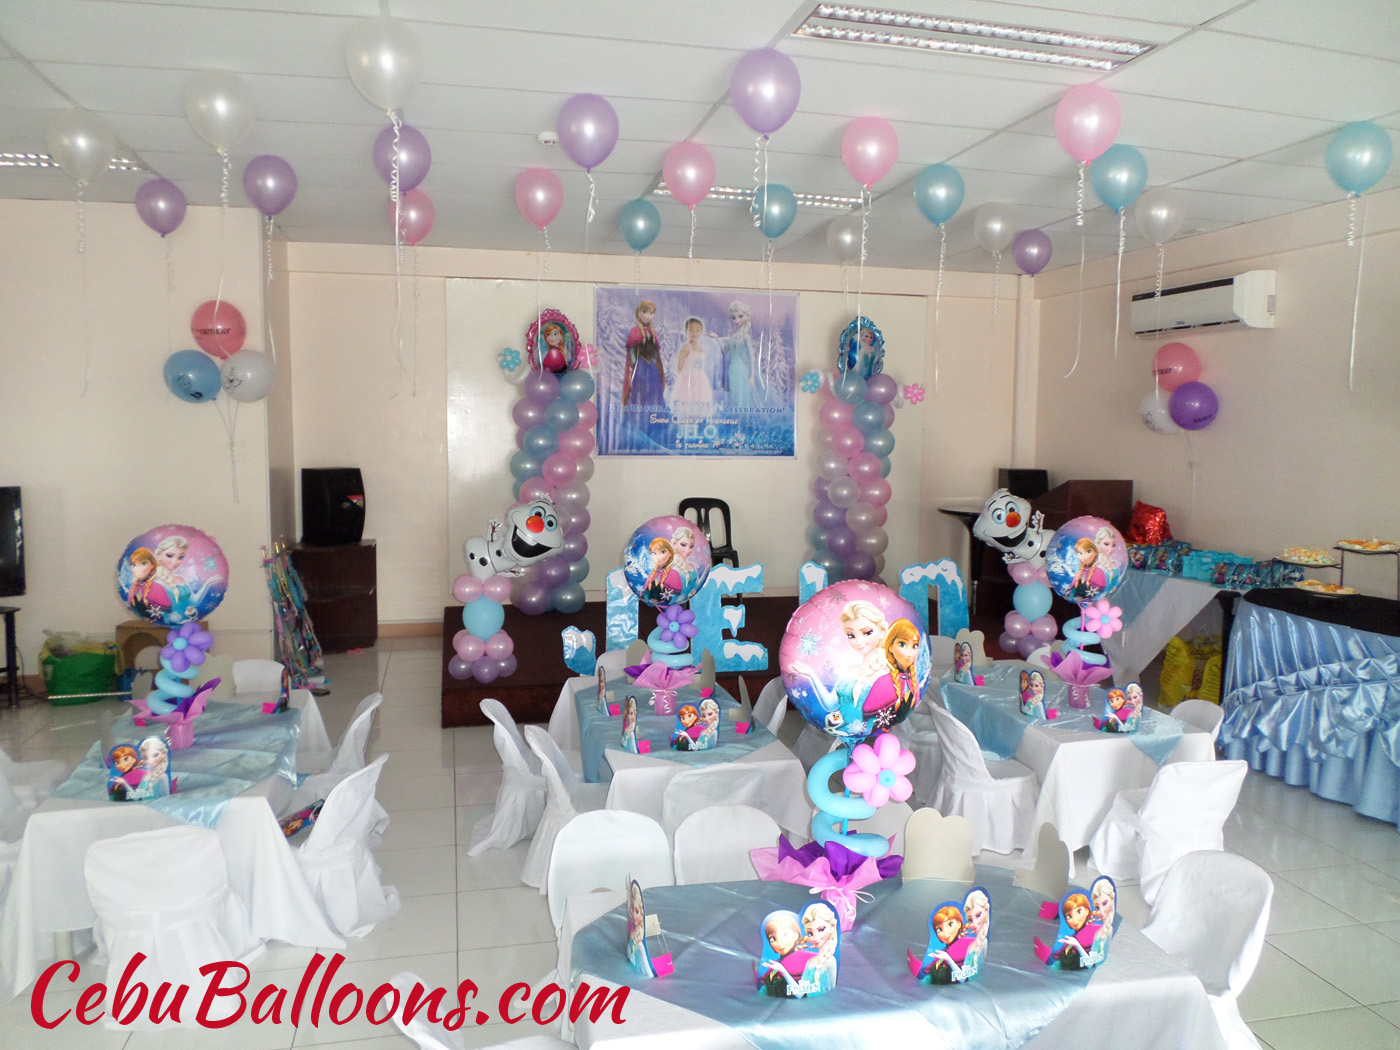 Walt Disney Frozen Theme Balloon Decoration Party Supplies At